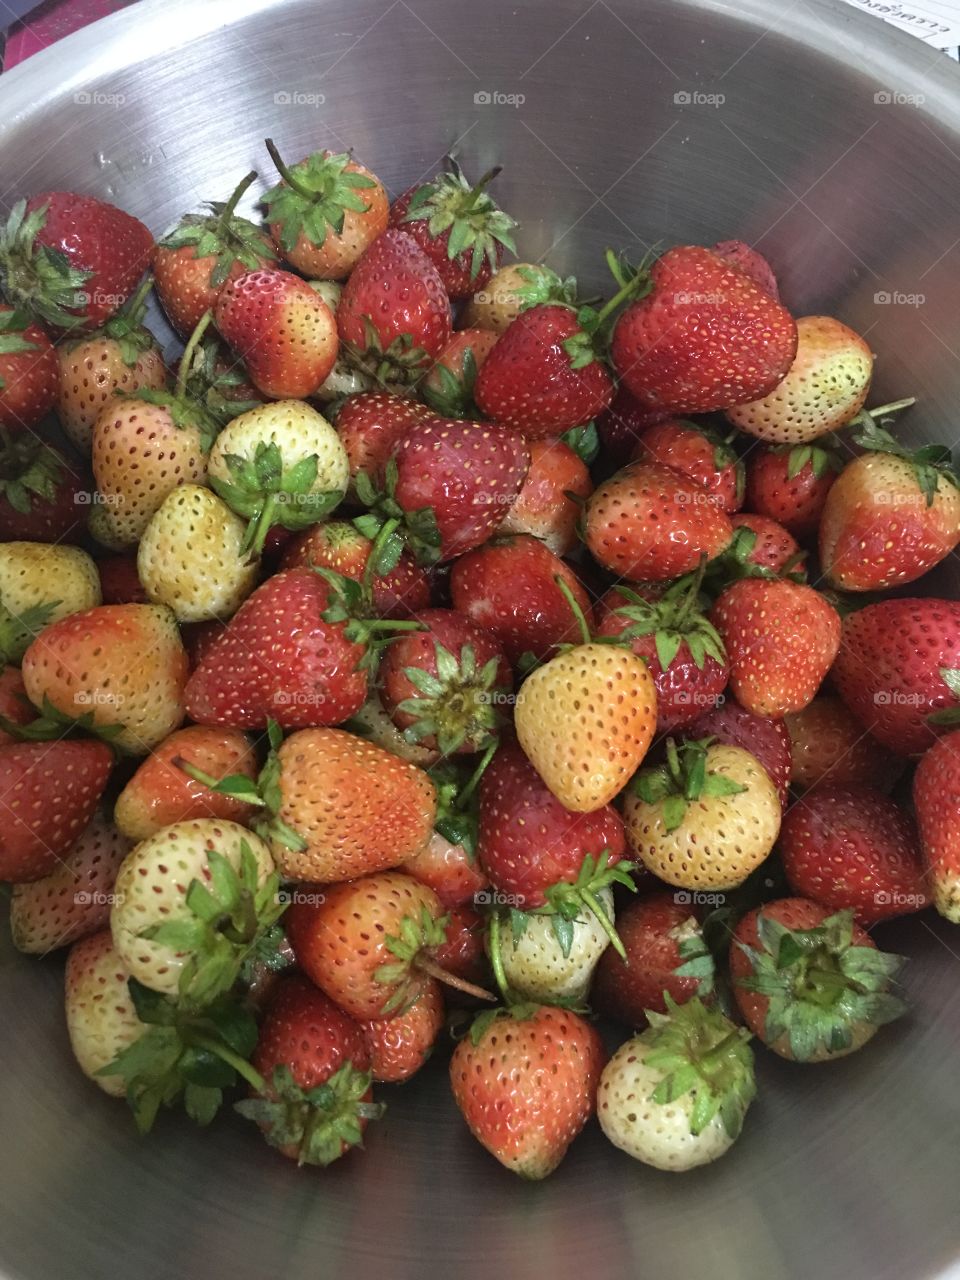 Strawberries season